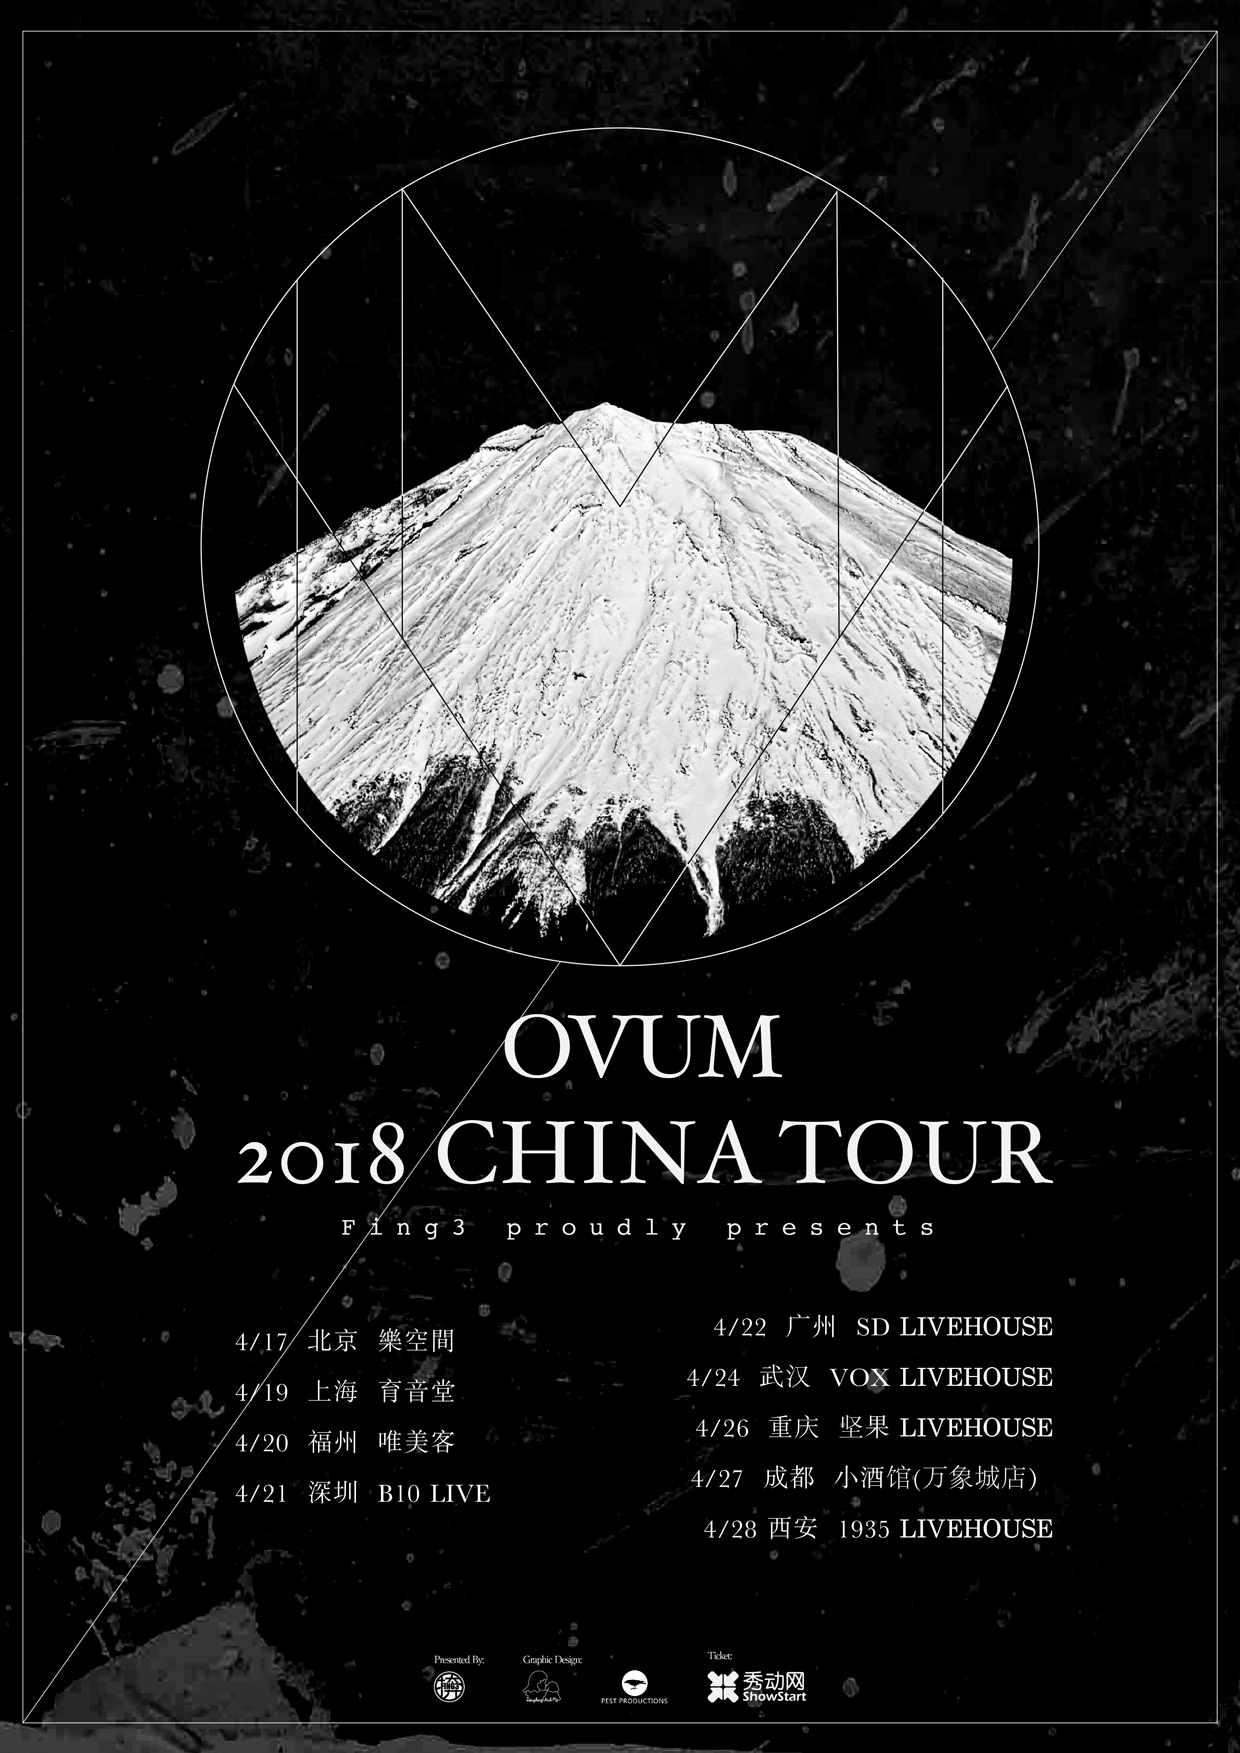 China tour 2018